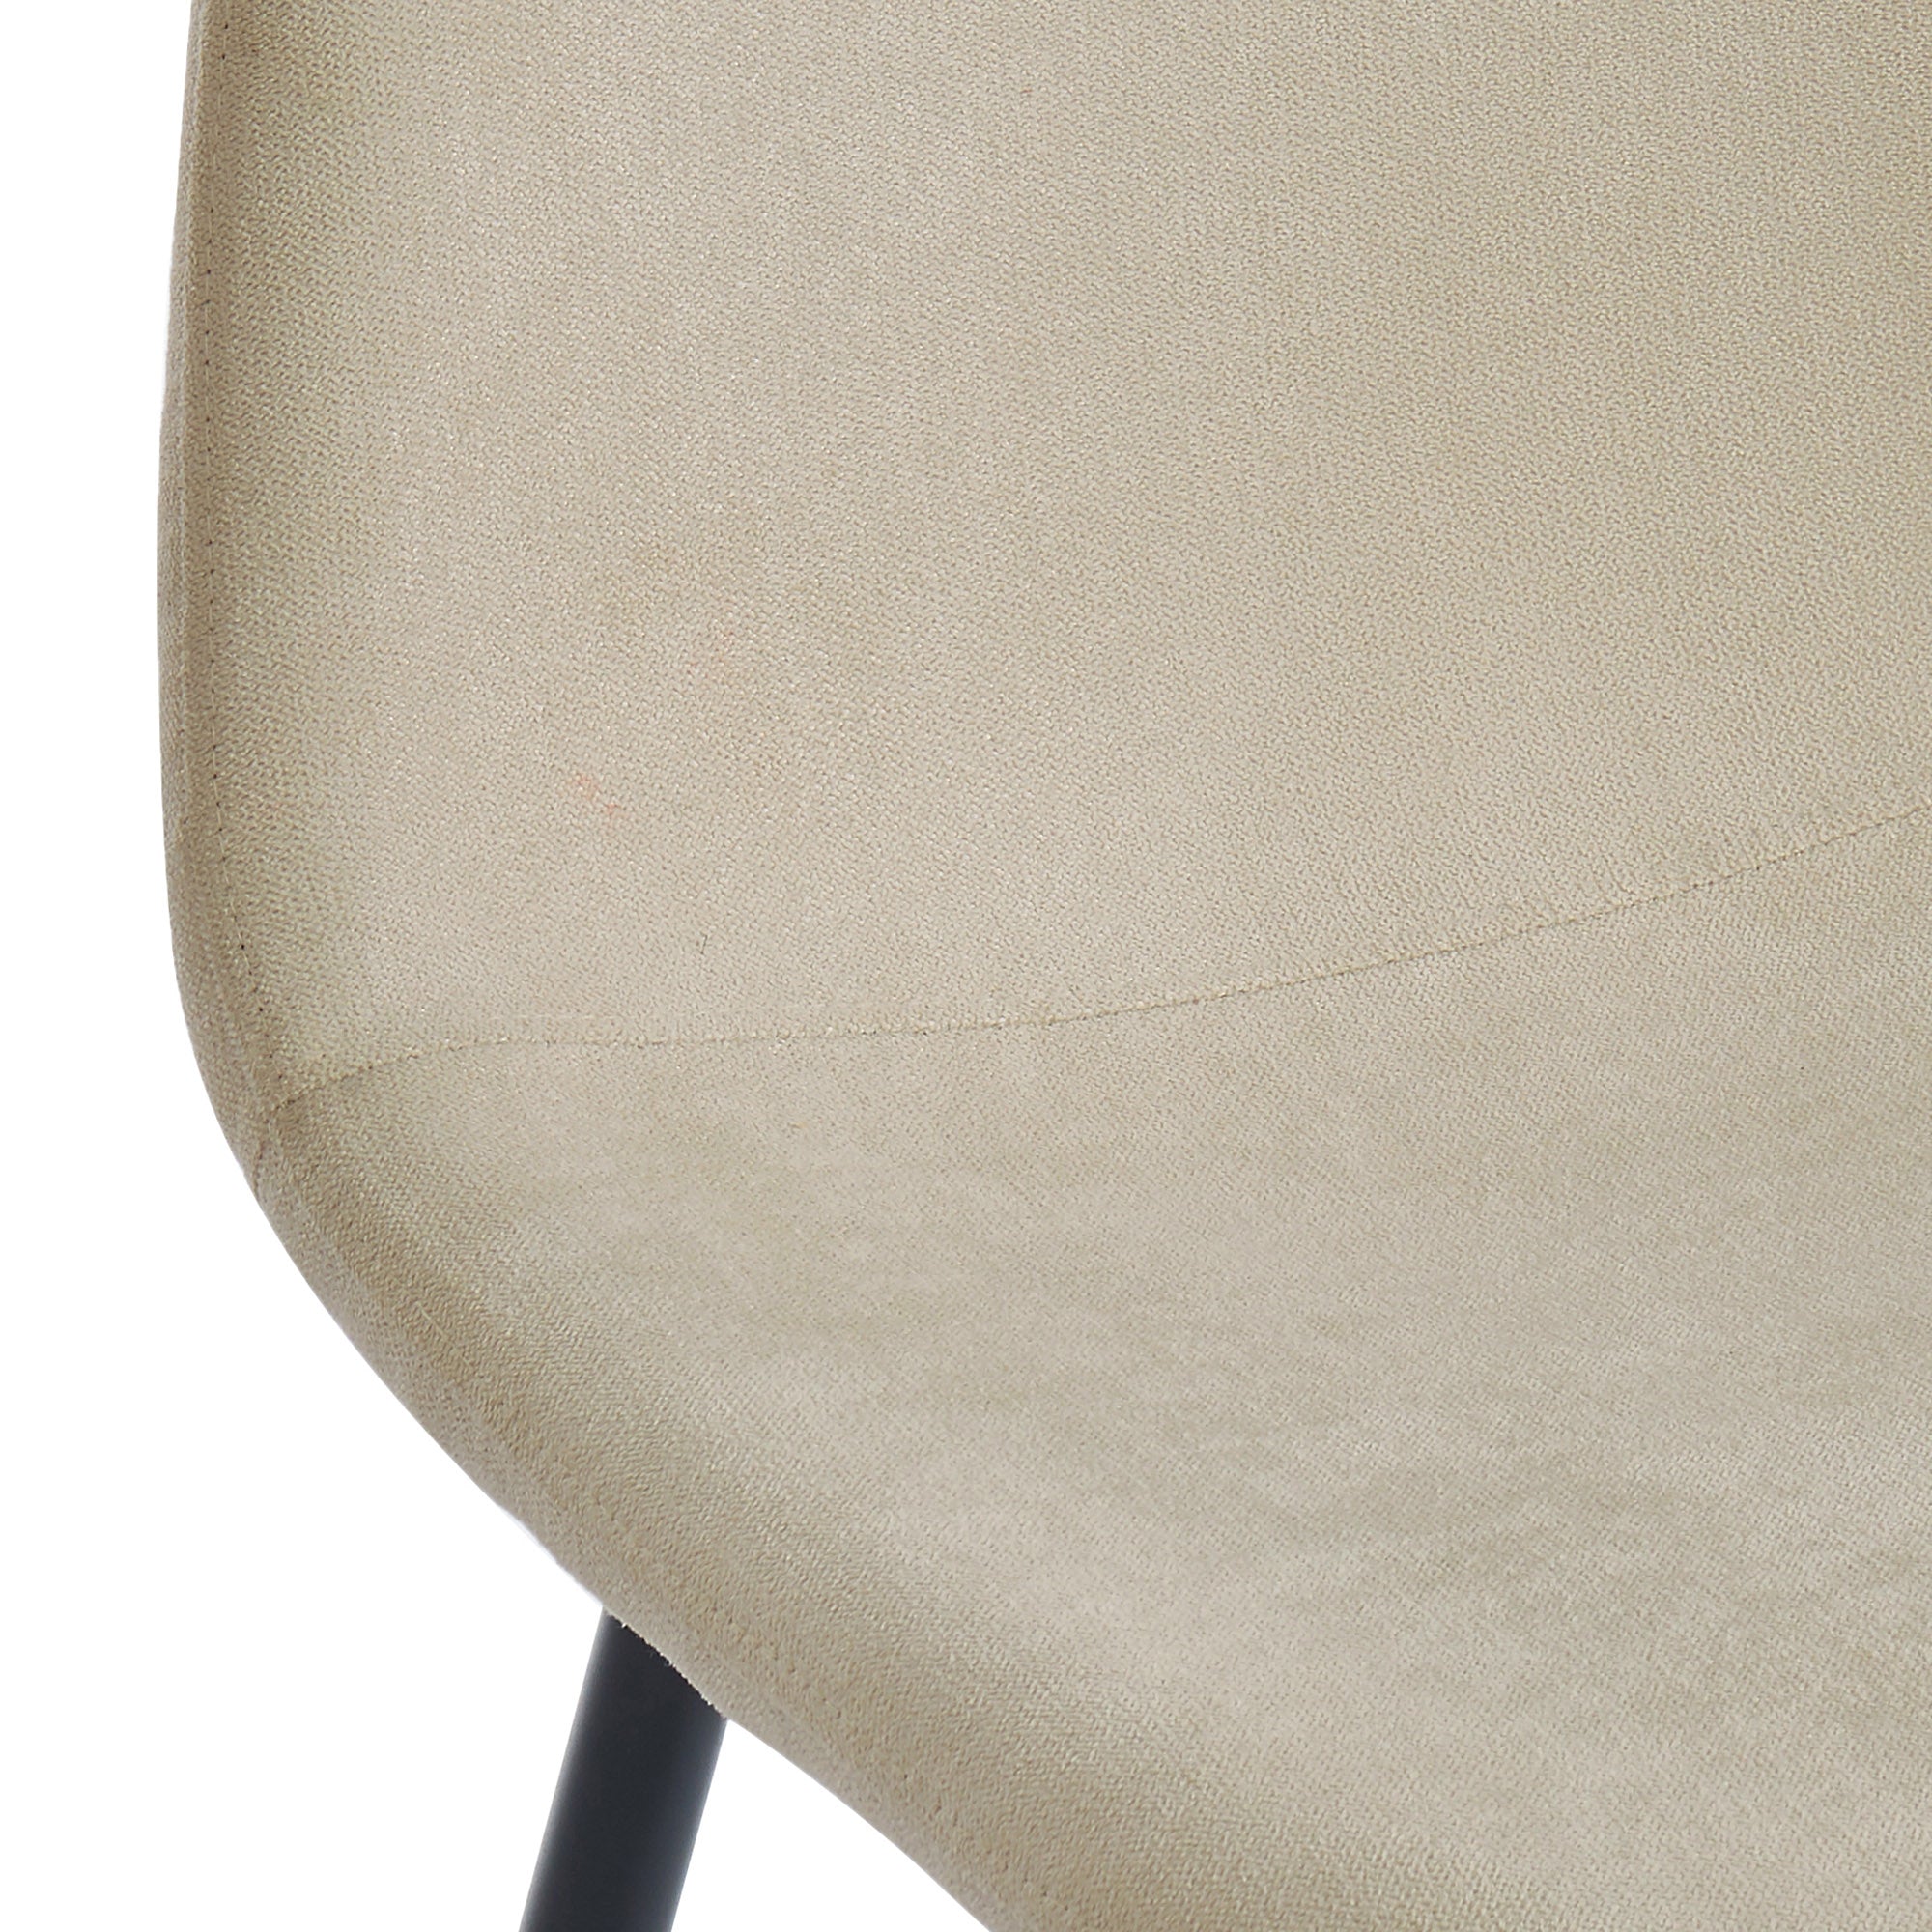 Blegravia/Petersen Metal/Glass/Fabric 5Pc Dining Set - Black Table/Beige Chair